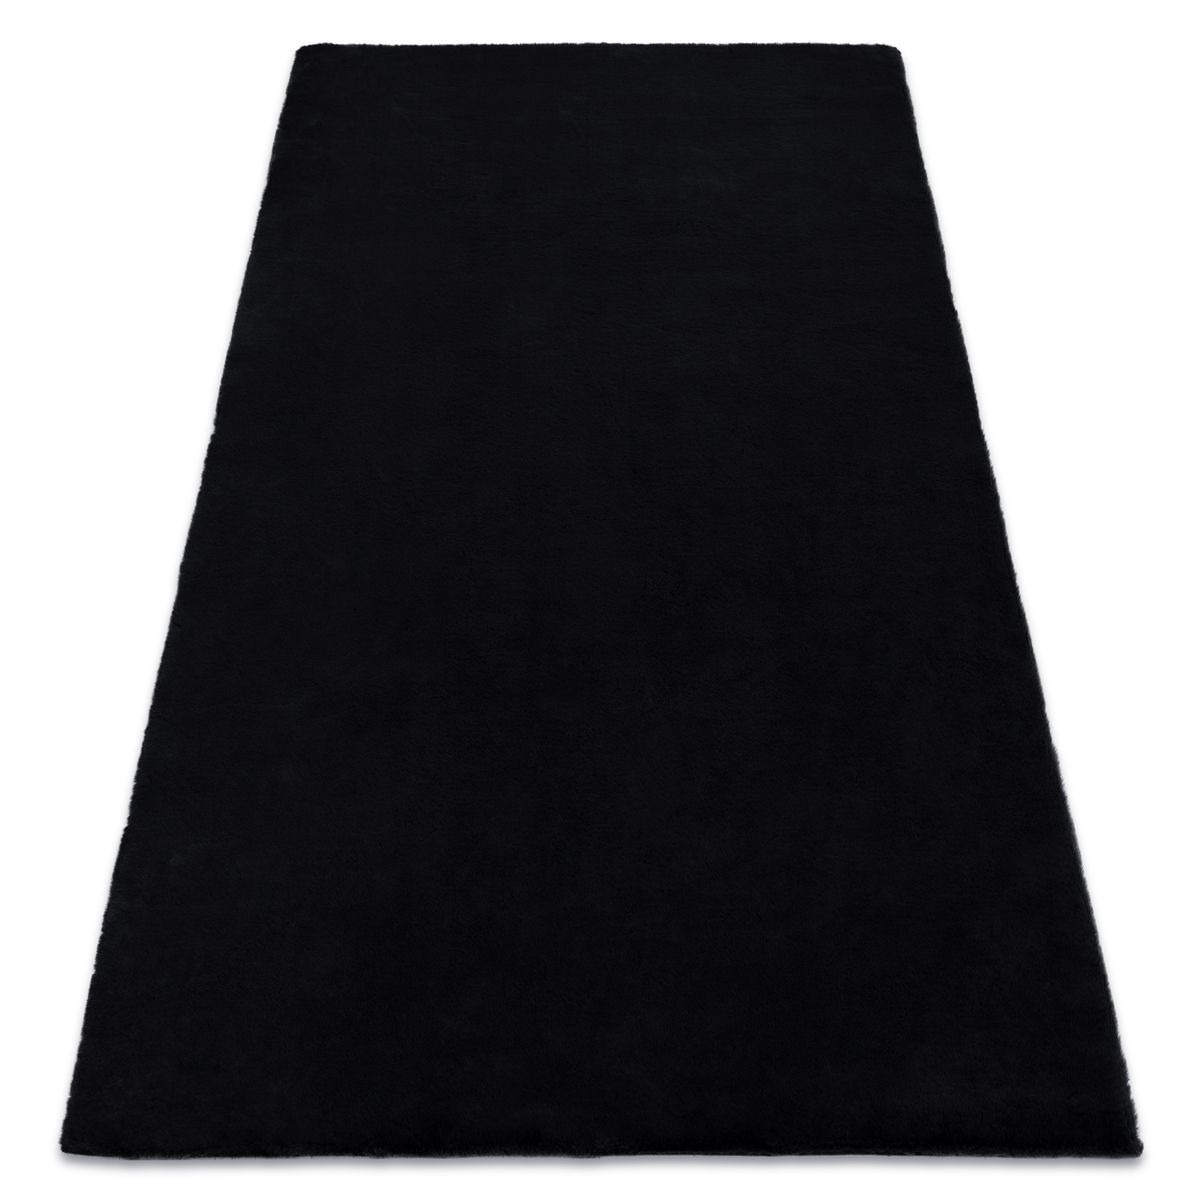 Taol Single Coloured Rug Black, 120x170 cm - image 1